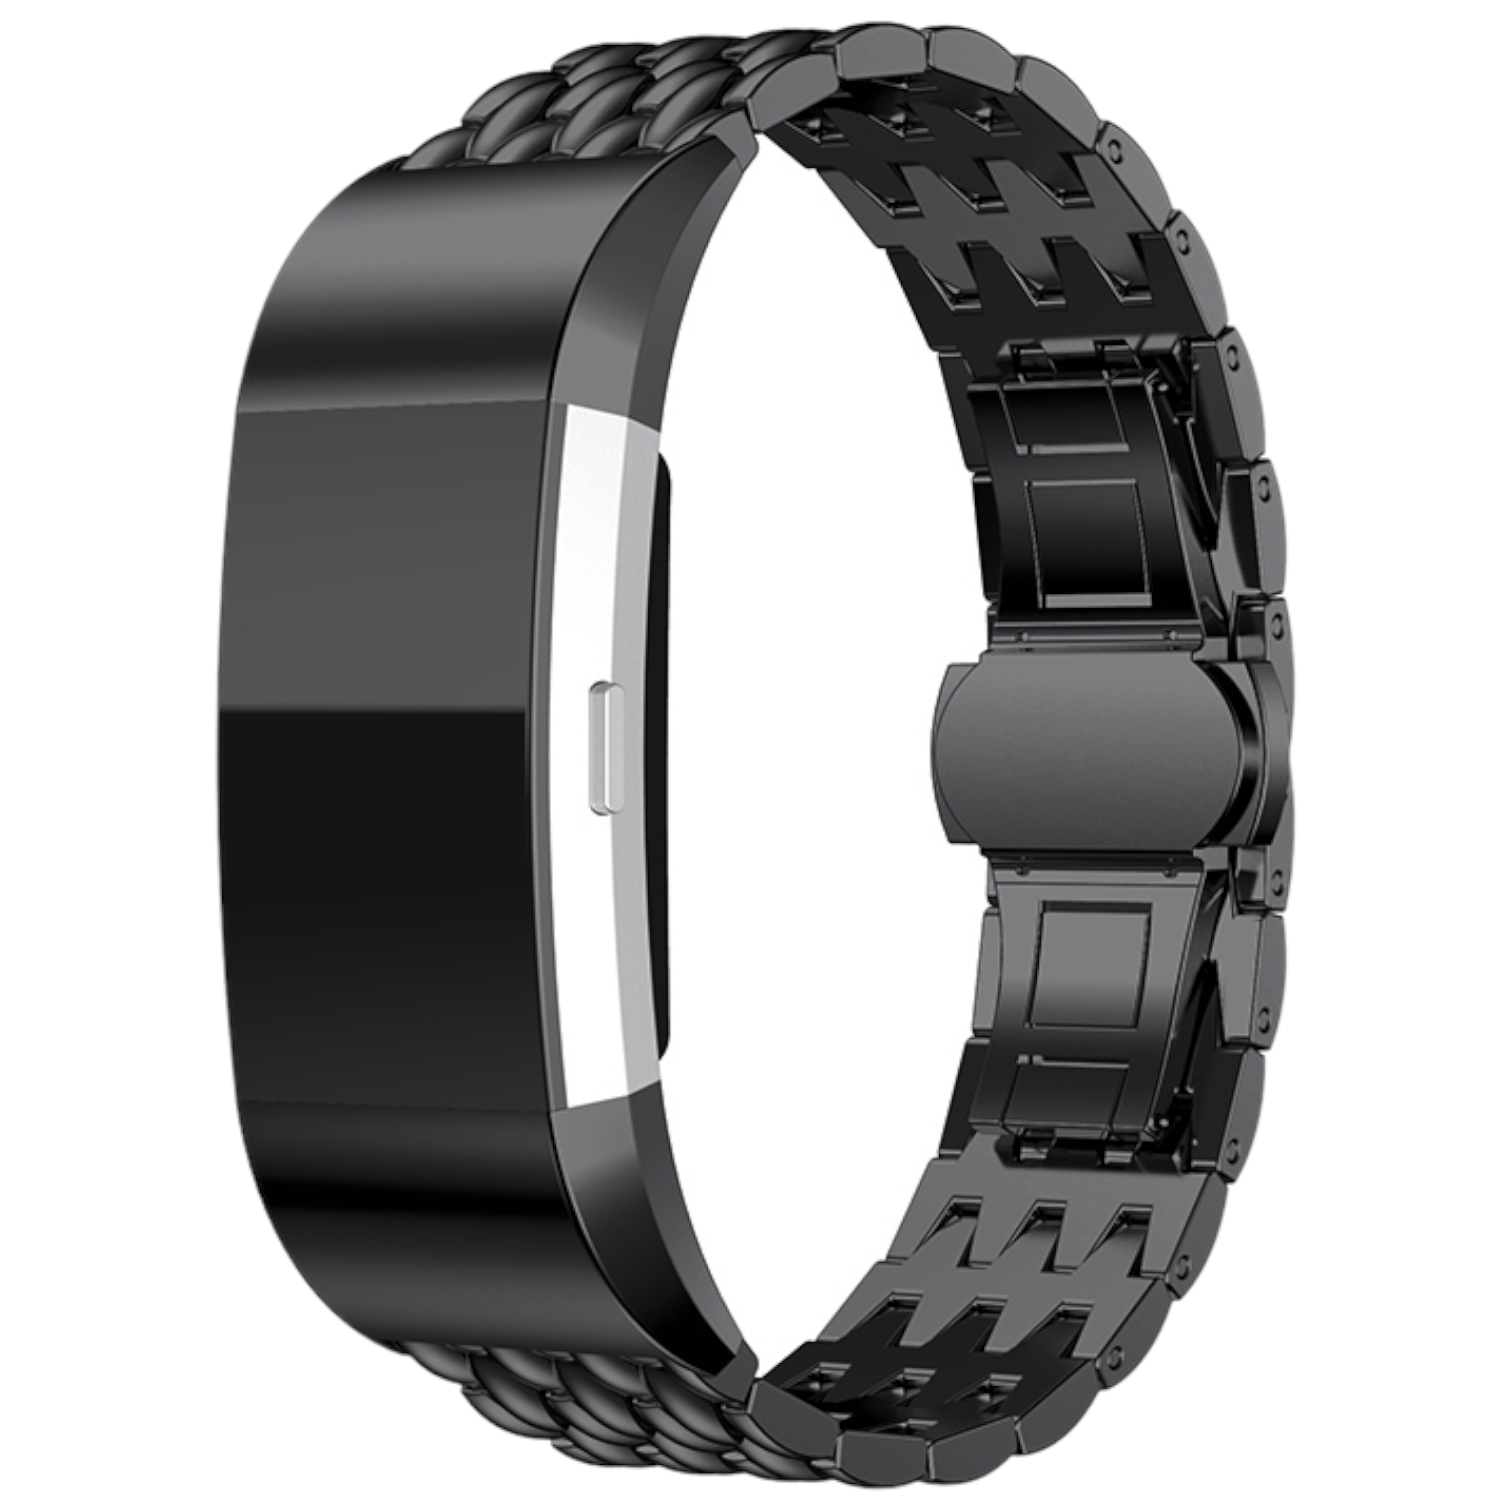 Fitbit Charge 2 sárkány Acél link pánt - fekete